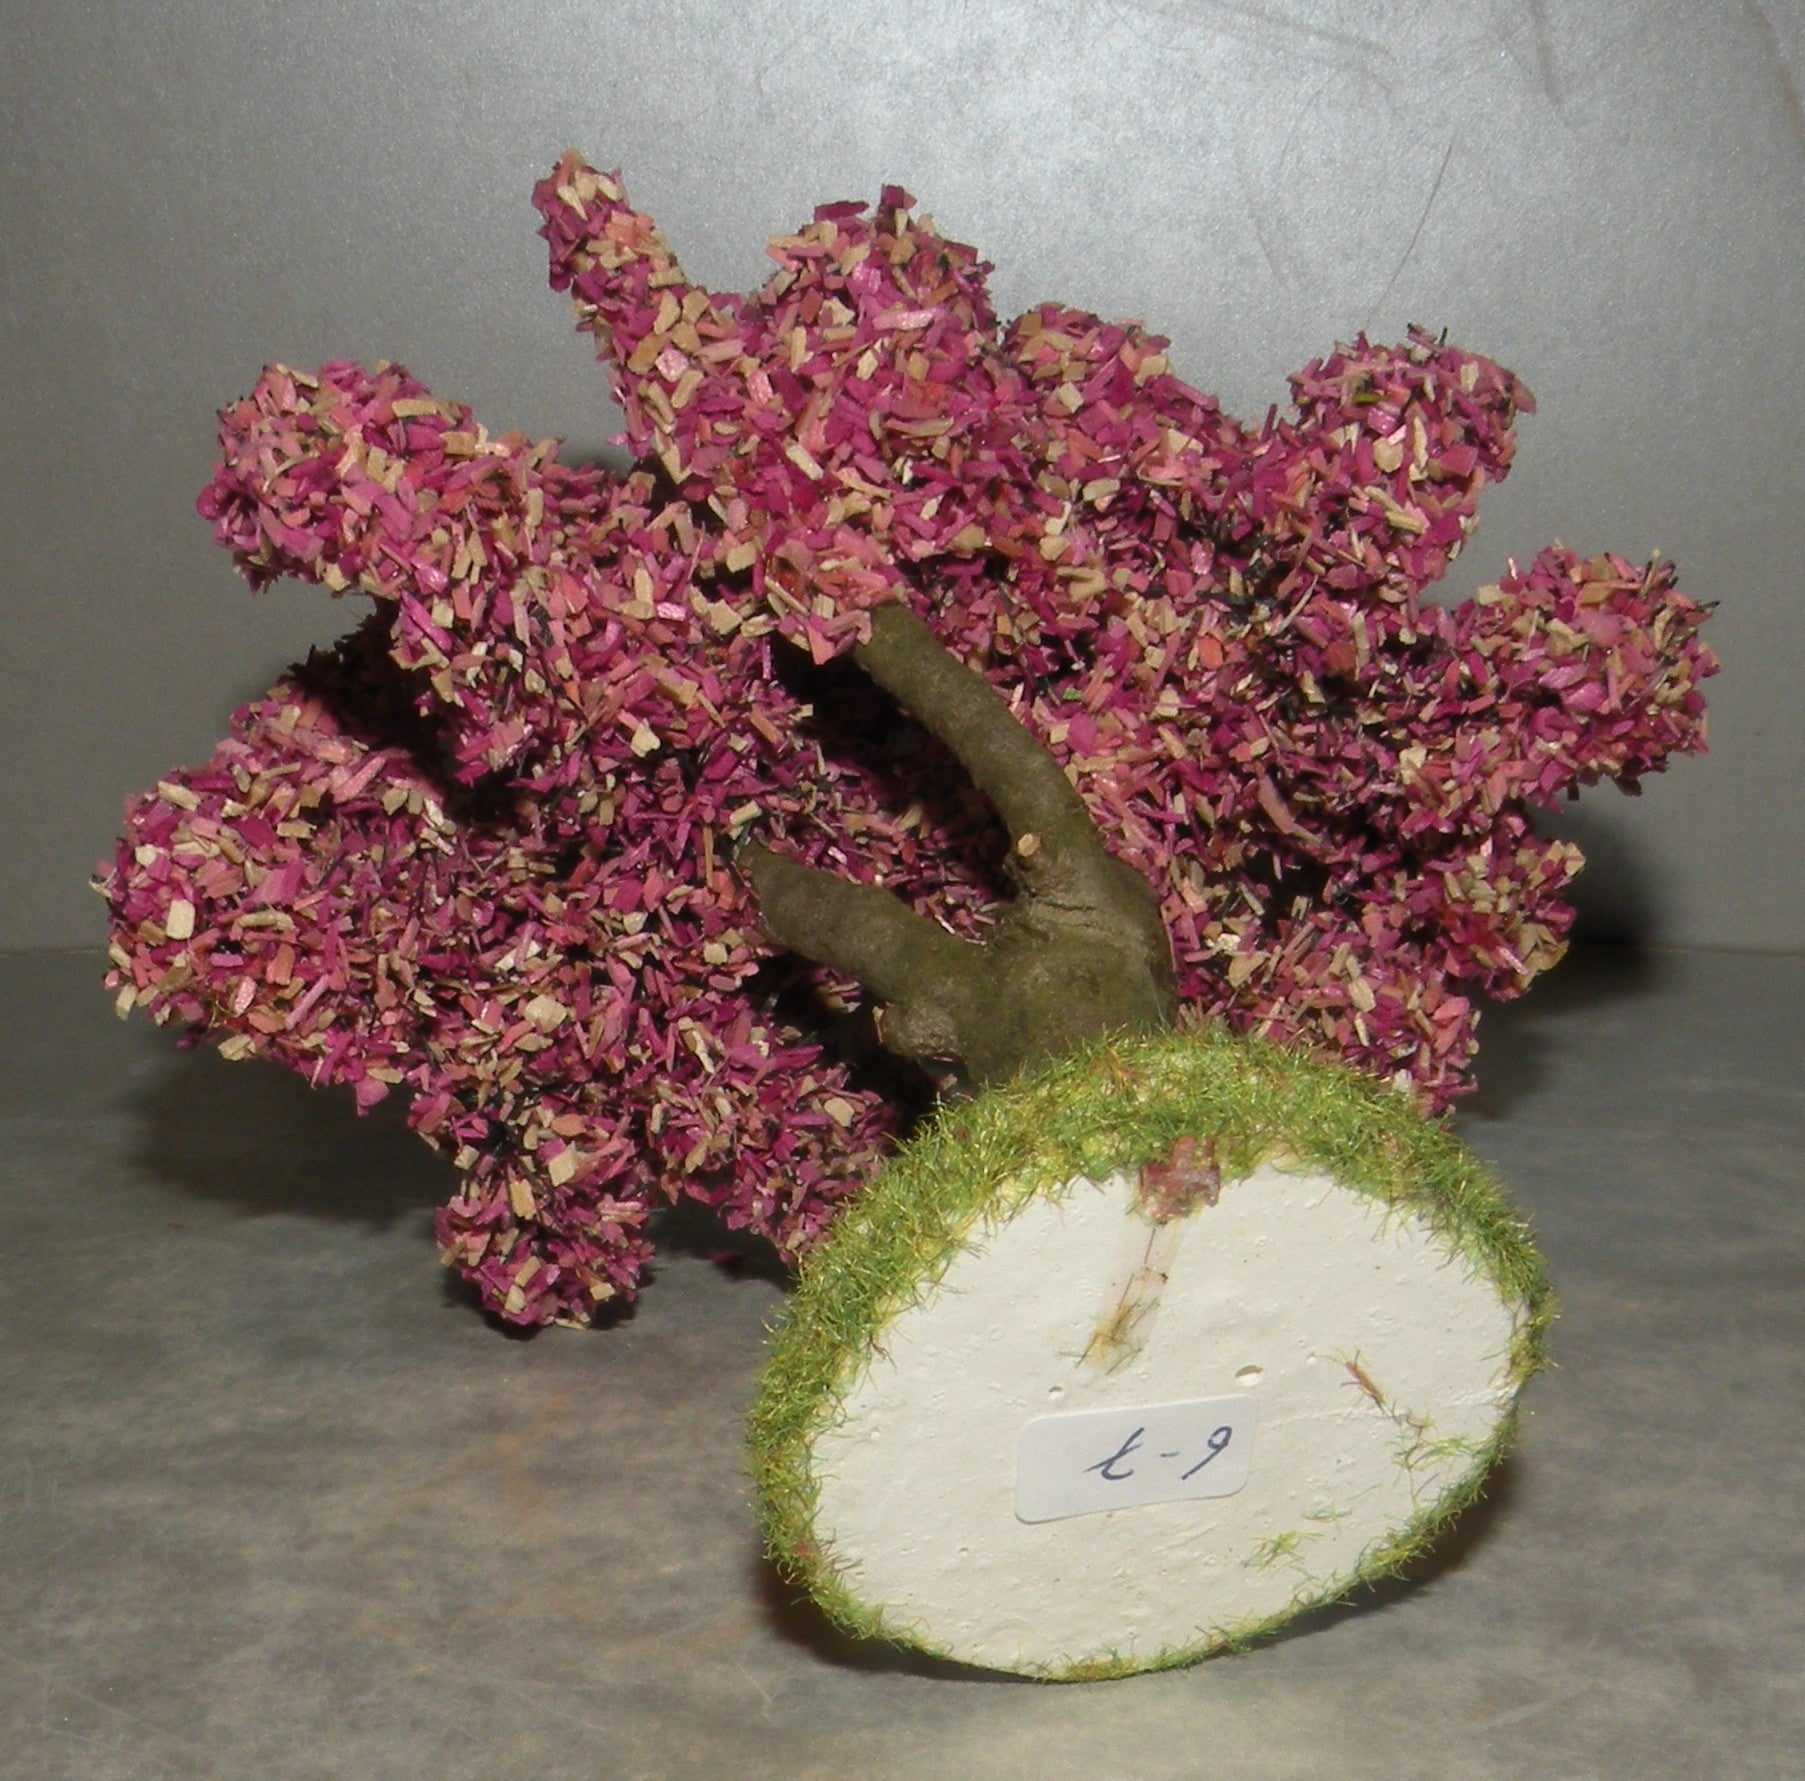 Almond Tree in Flowers , Didier 7 - 6 Cm